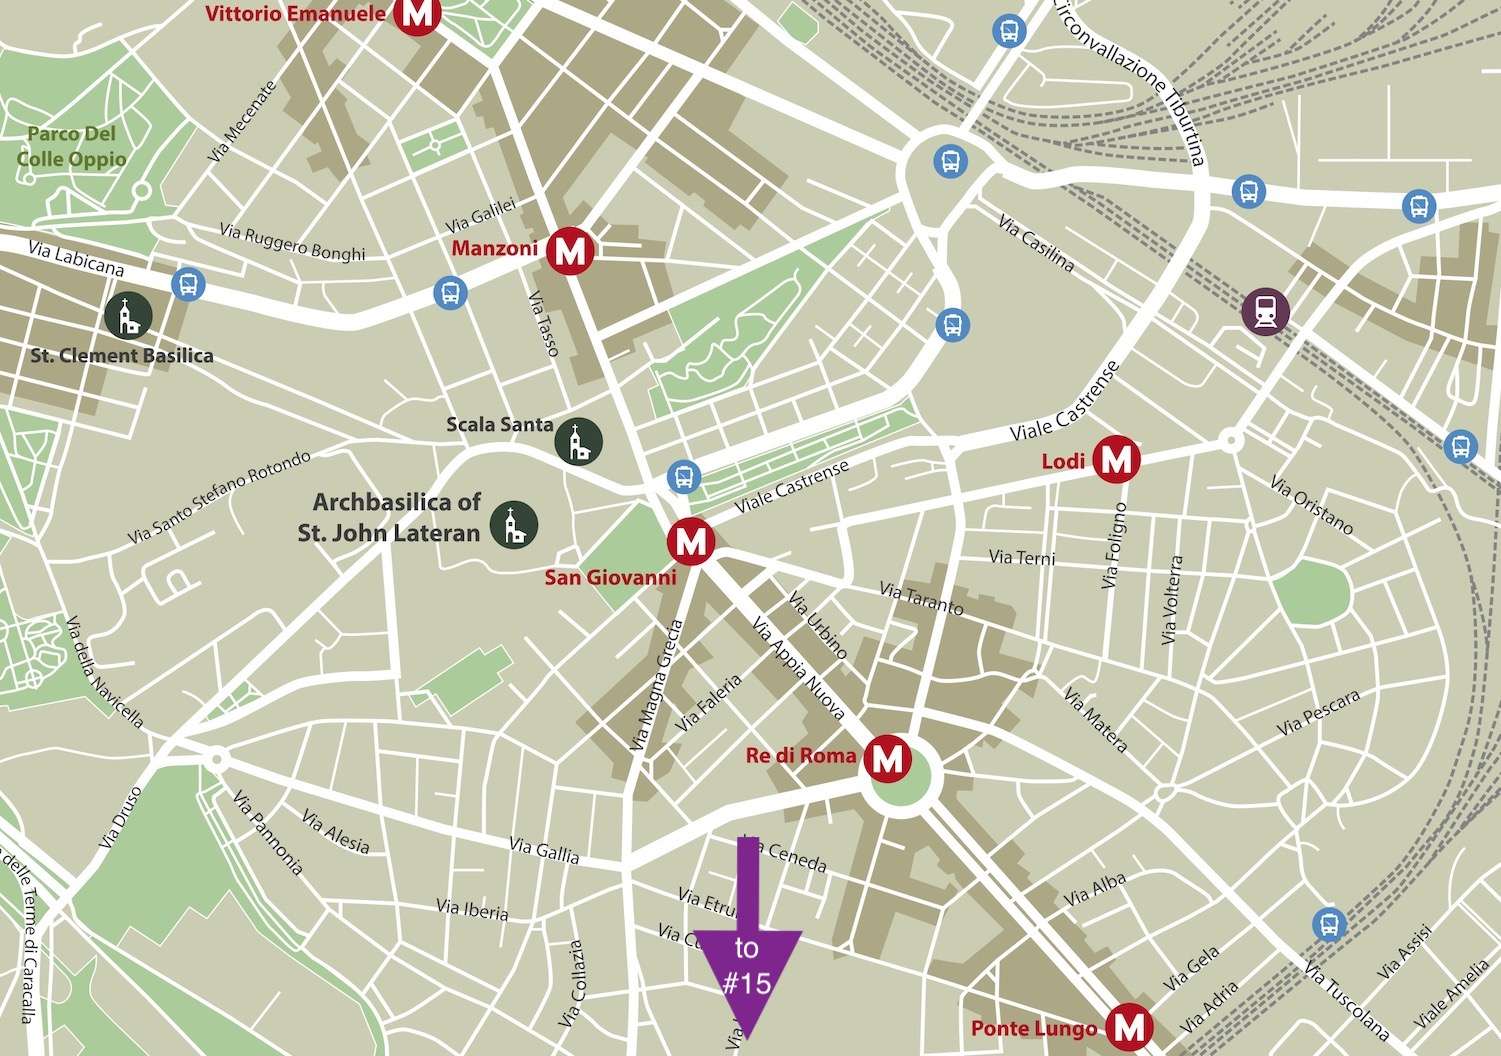 TIK Map Of Rome6 